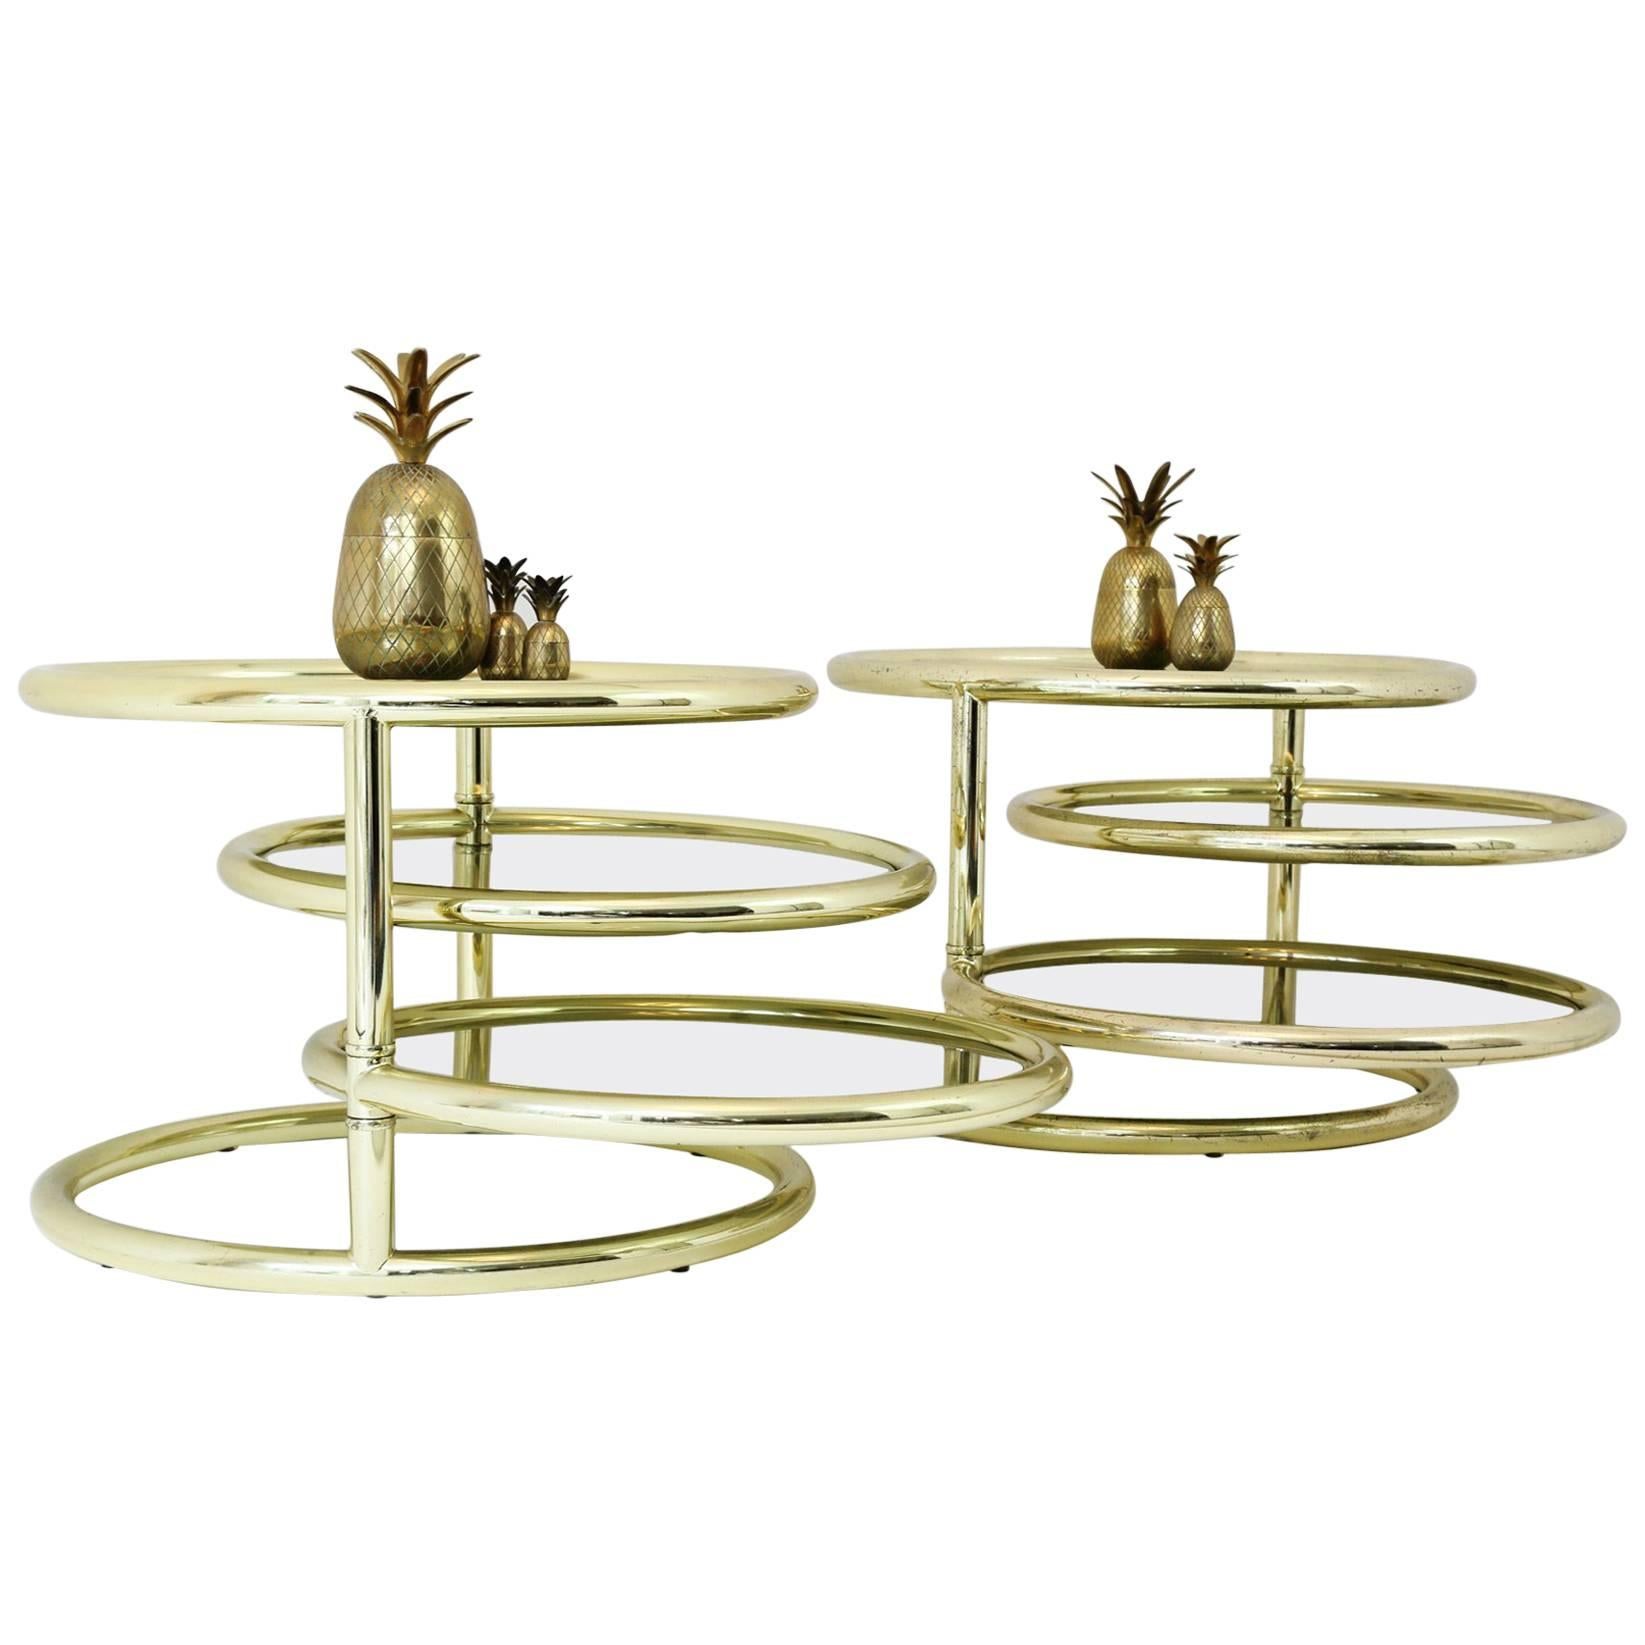 Milo Baughman Style Circular Coffee Tables